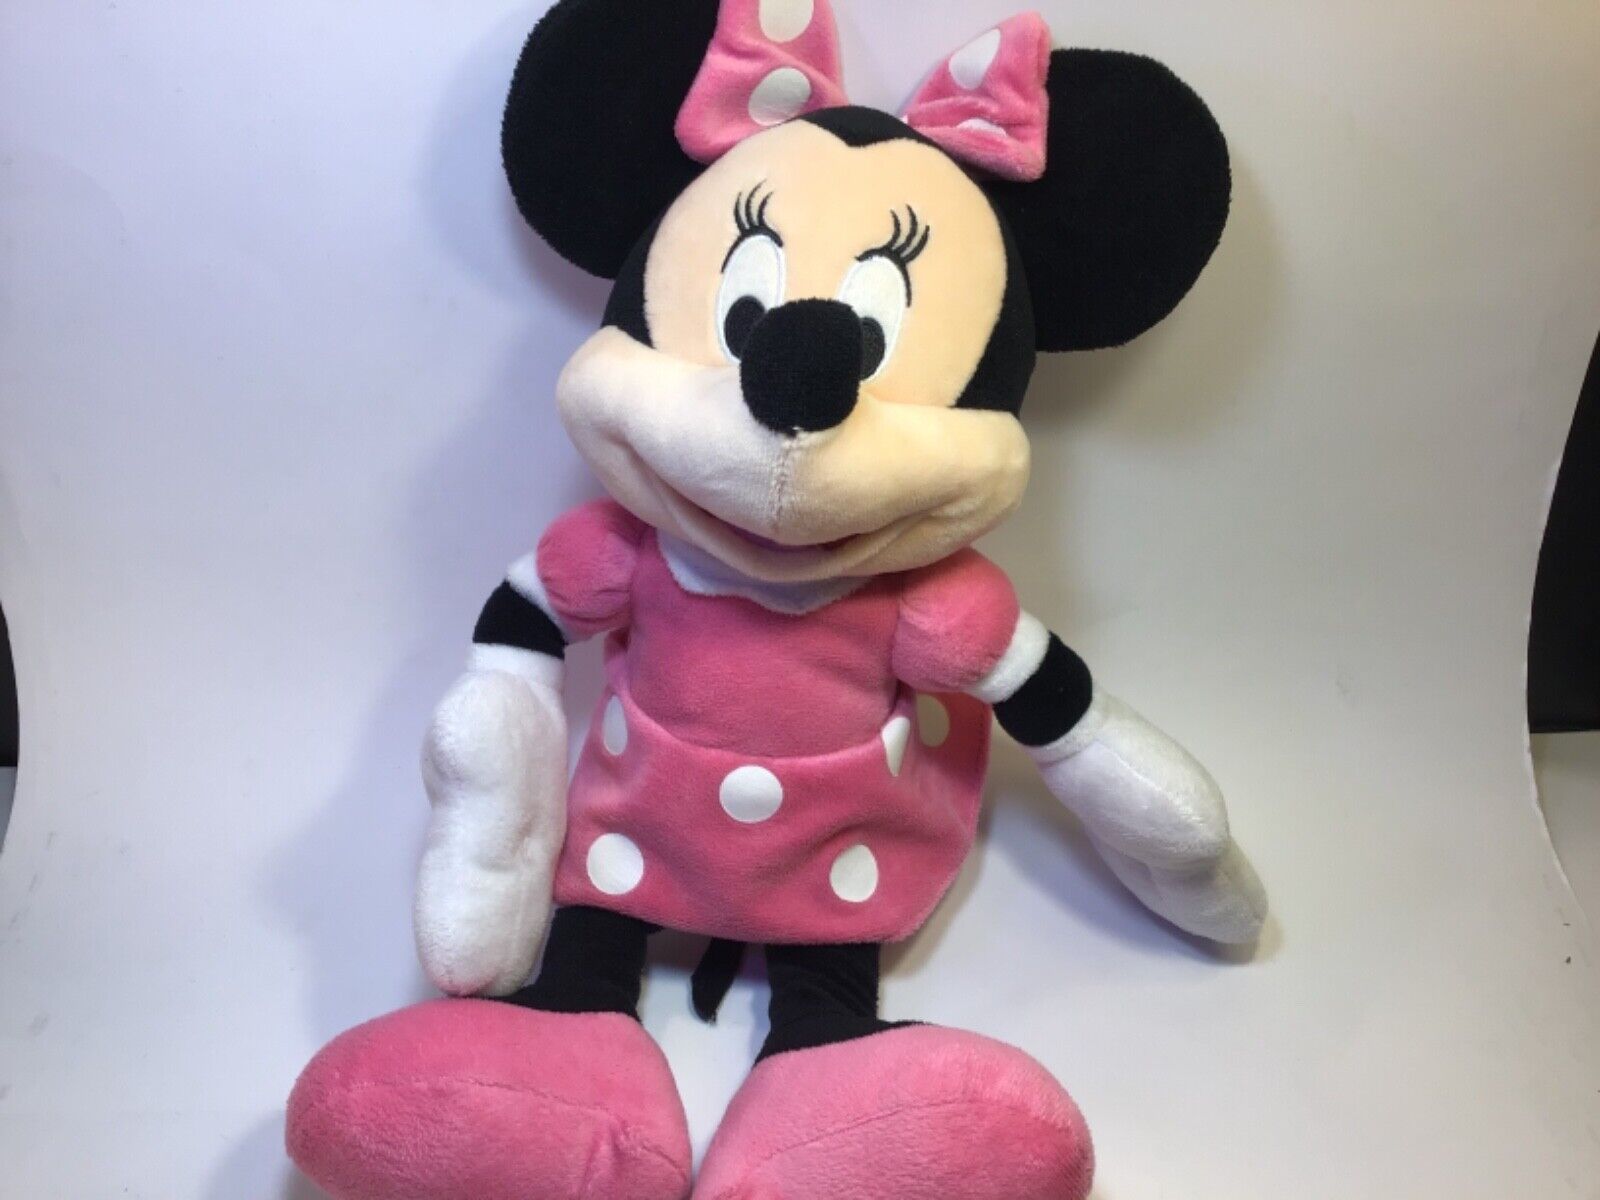 Disney Mini Mouse Plush Toy 16”